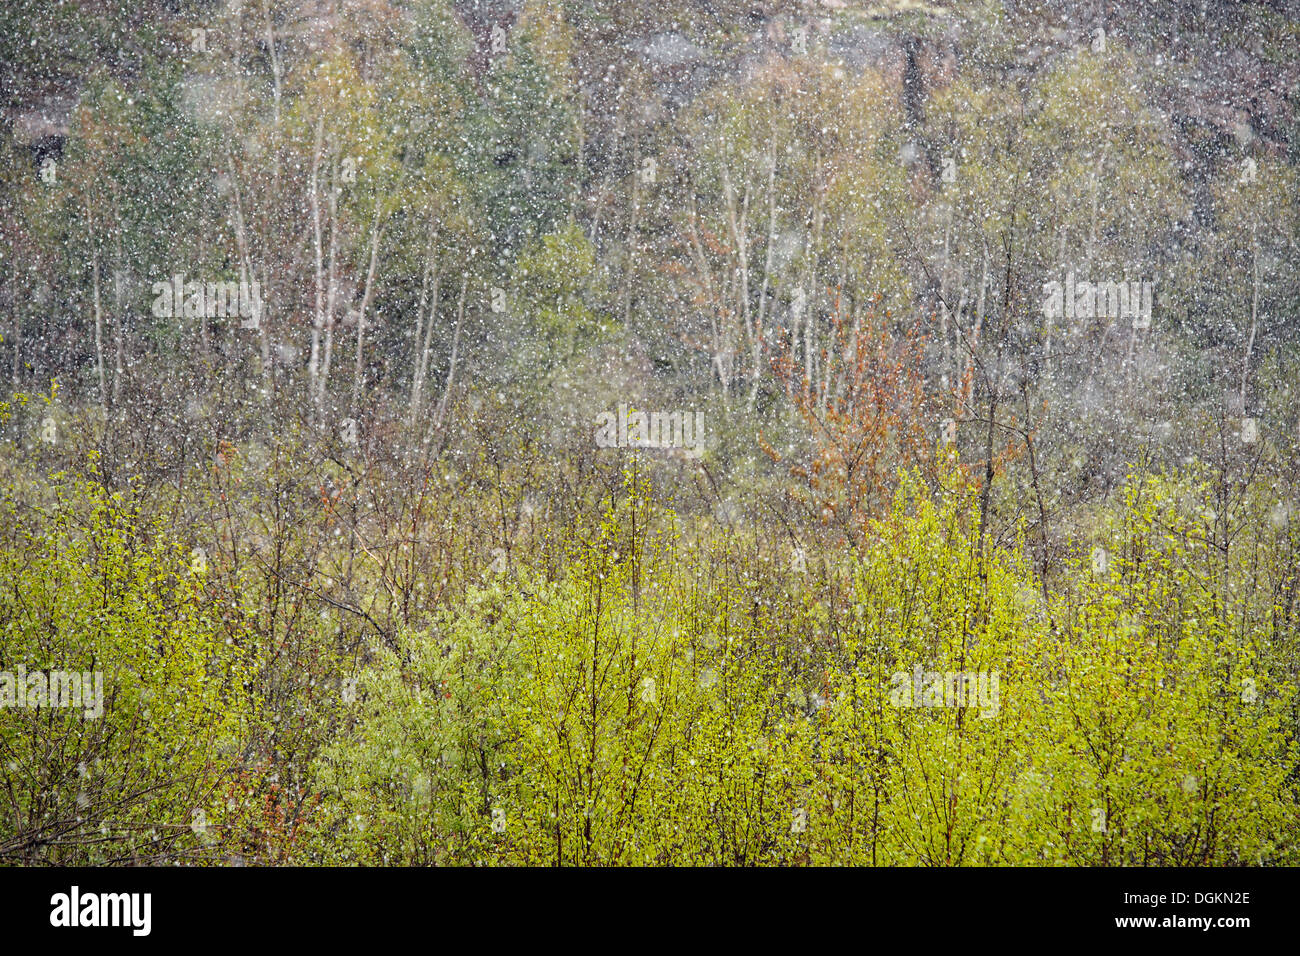 Frühling-Bäume mit aufstrebenden Laub im späten Frühlingsschnee squall Wanup Ontario Kanada Stockfoto